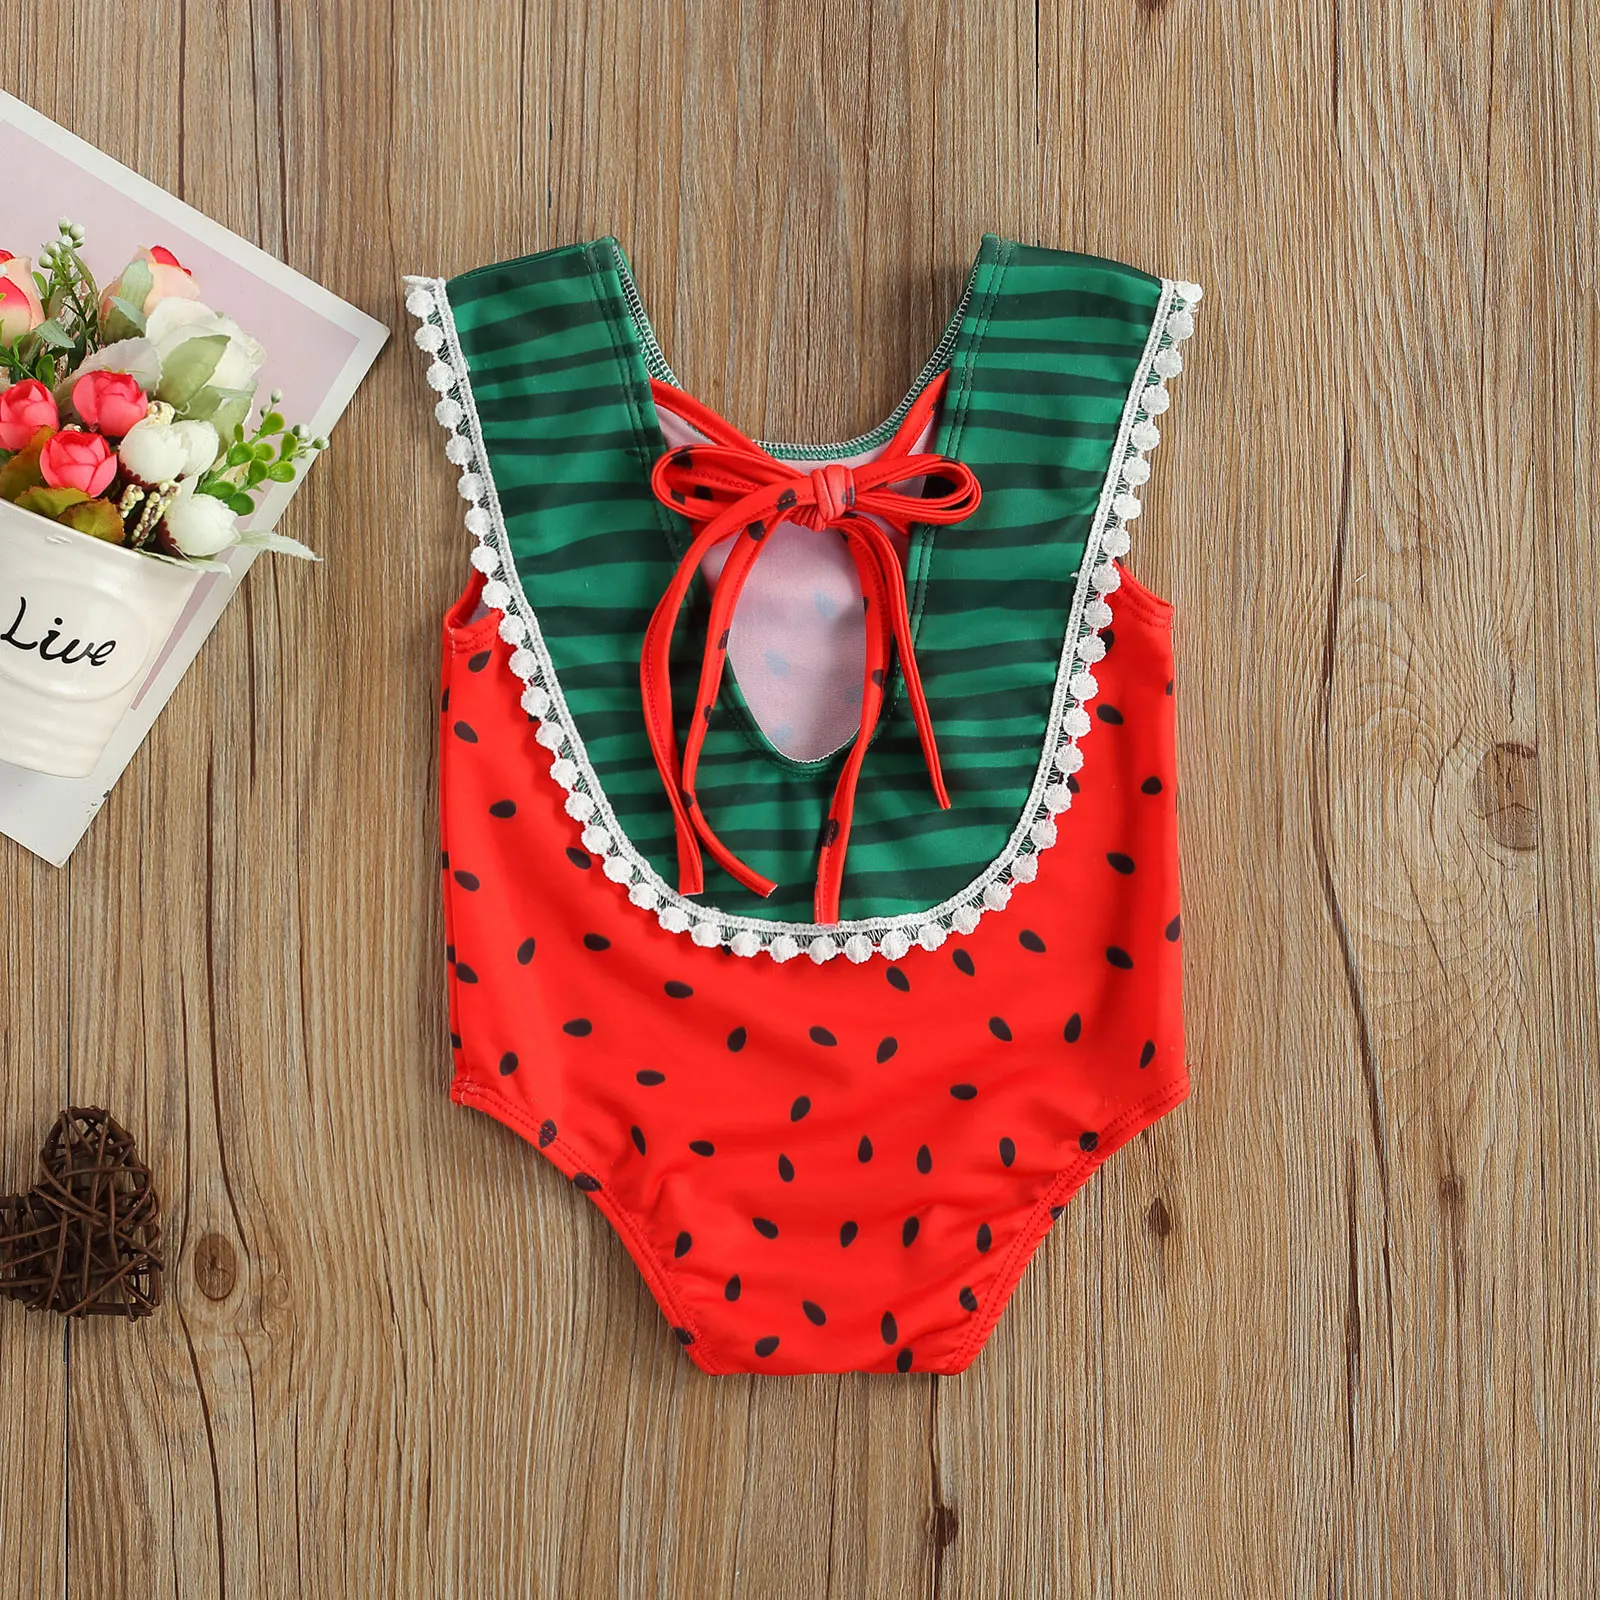 Girl's One-Piece Swimsuit, Watermelon Print Sleeveless Ruffle Bodysuit for  Swimming Beach Vacation